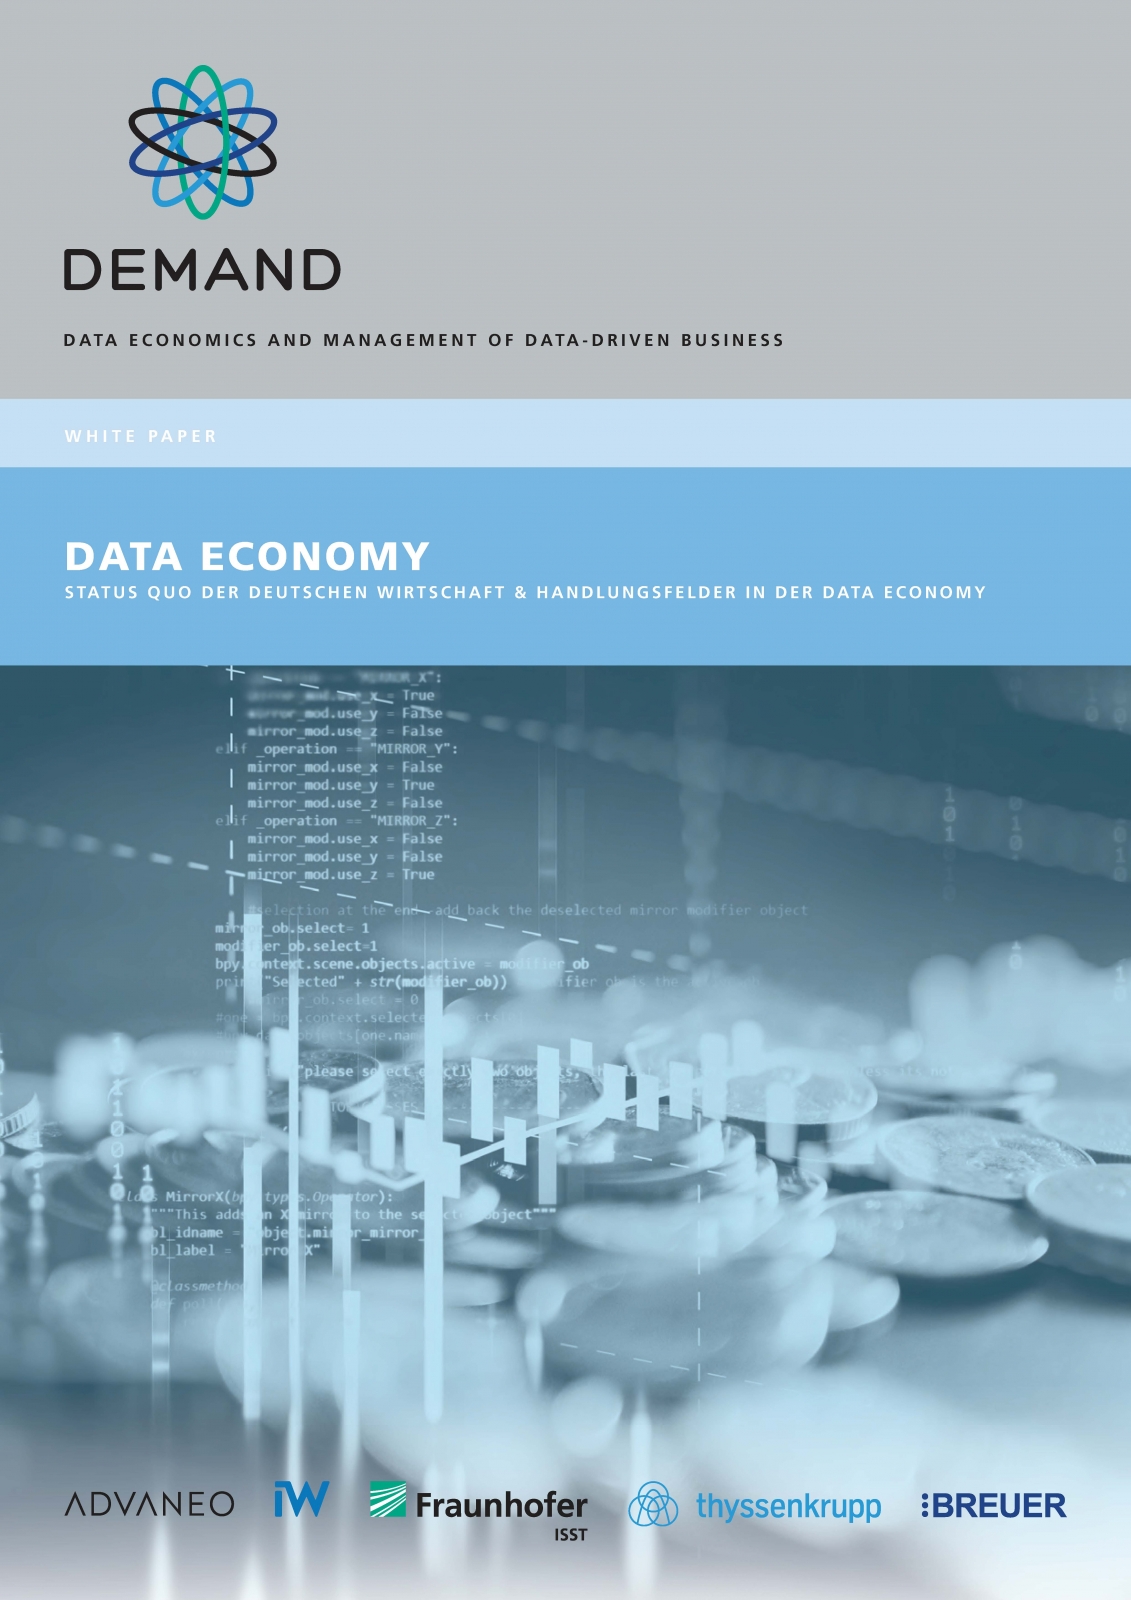 DEMAND-Whitepaper - Data economics & management of data driven business